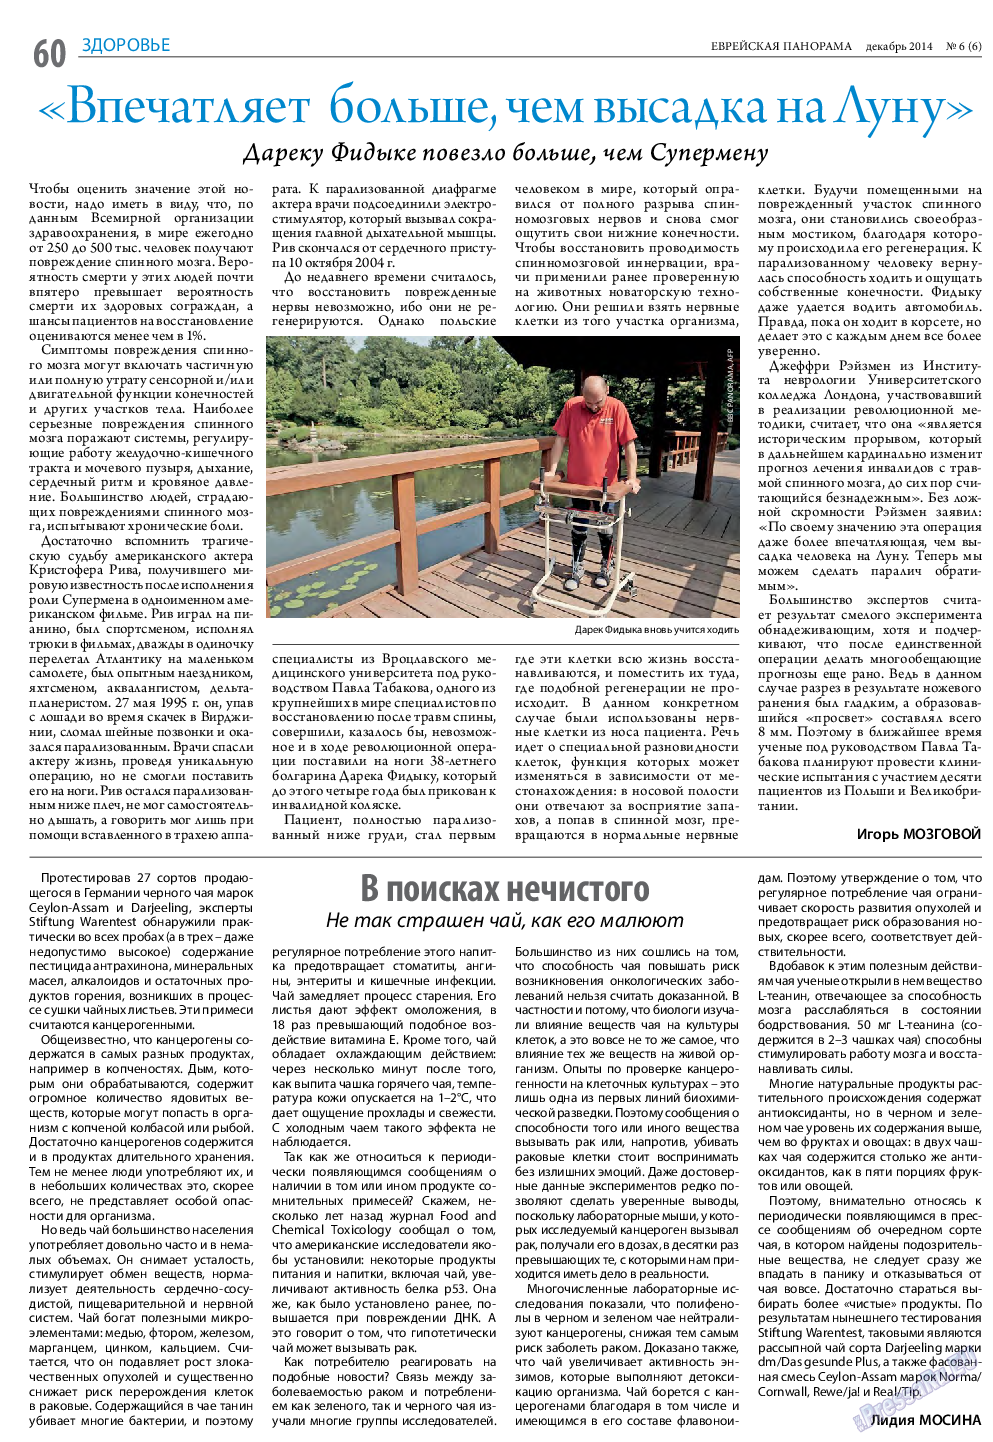 Еврейская панорама, газета. 2014 №6 стр.60